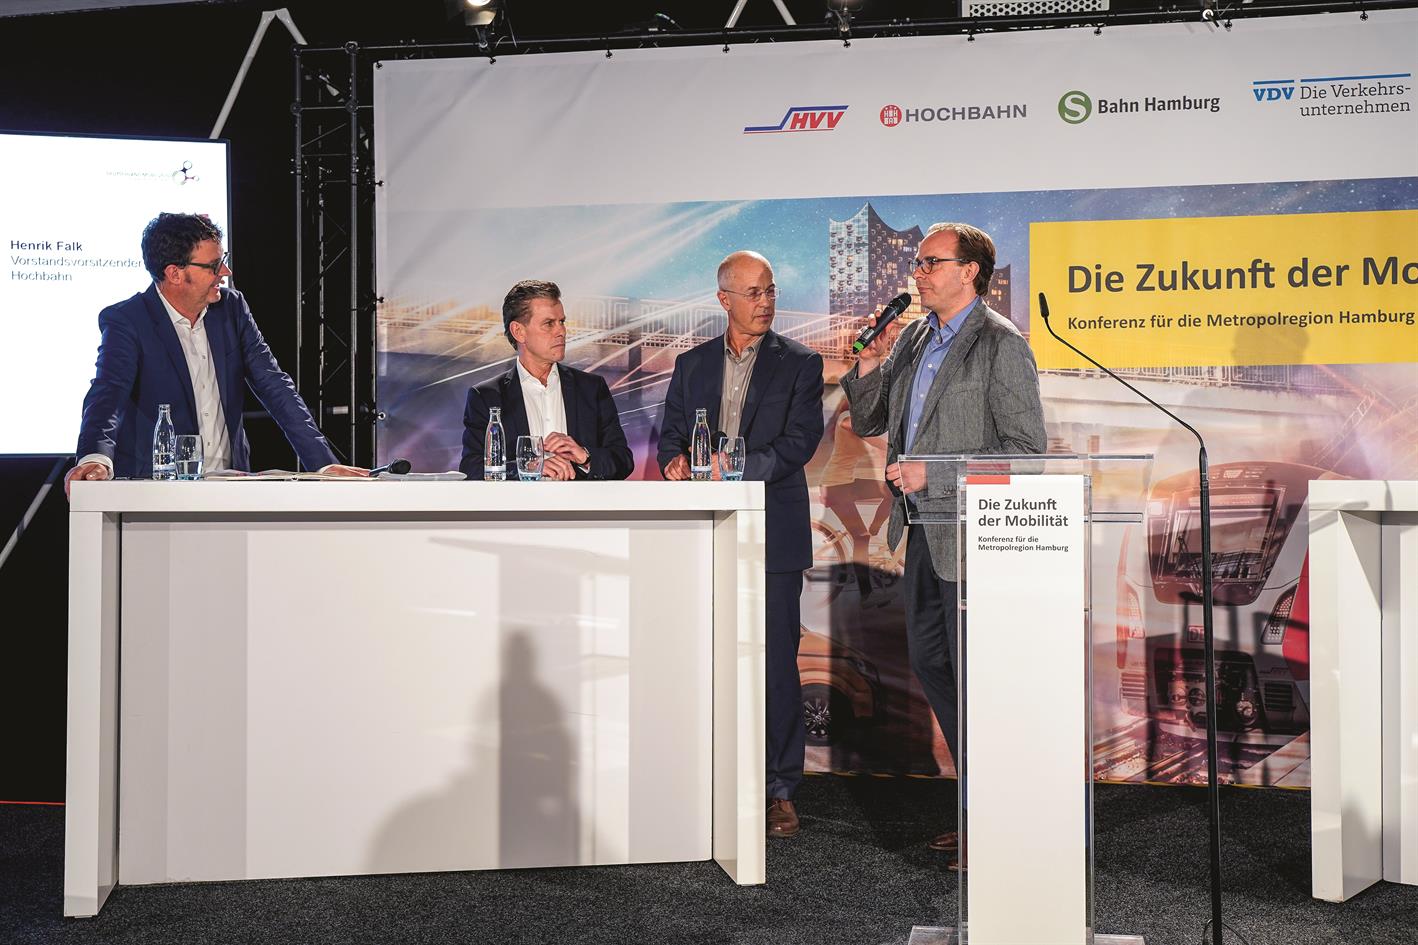 Diskussion (v.l.n.r.): Moderator Mathias Iken (Hamburger Abendblatt), Kay Uwe Arnecke (S-Bahn Hamburg), Lutz Aigner (HVV), Henrik Falk (Hochbahn).